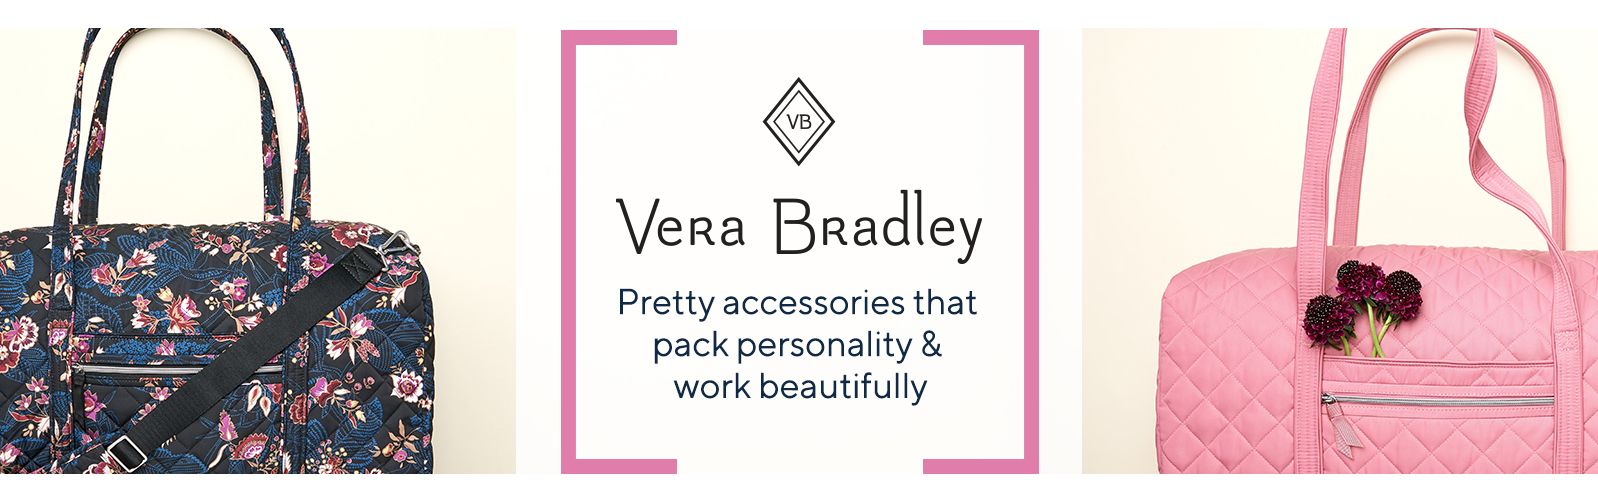 Vera Bradley, Bags